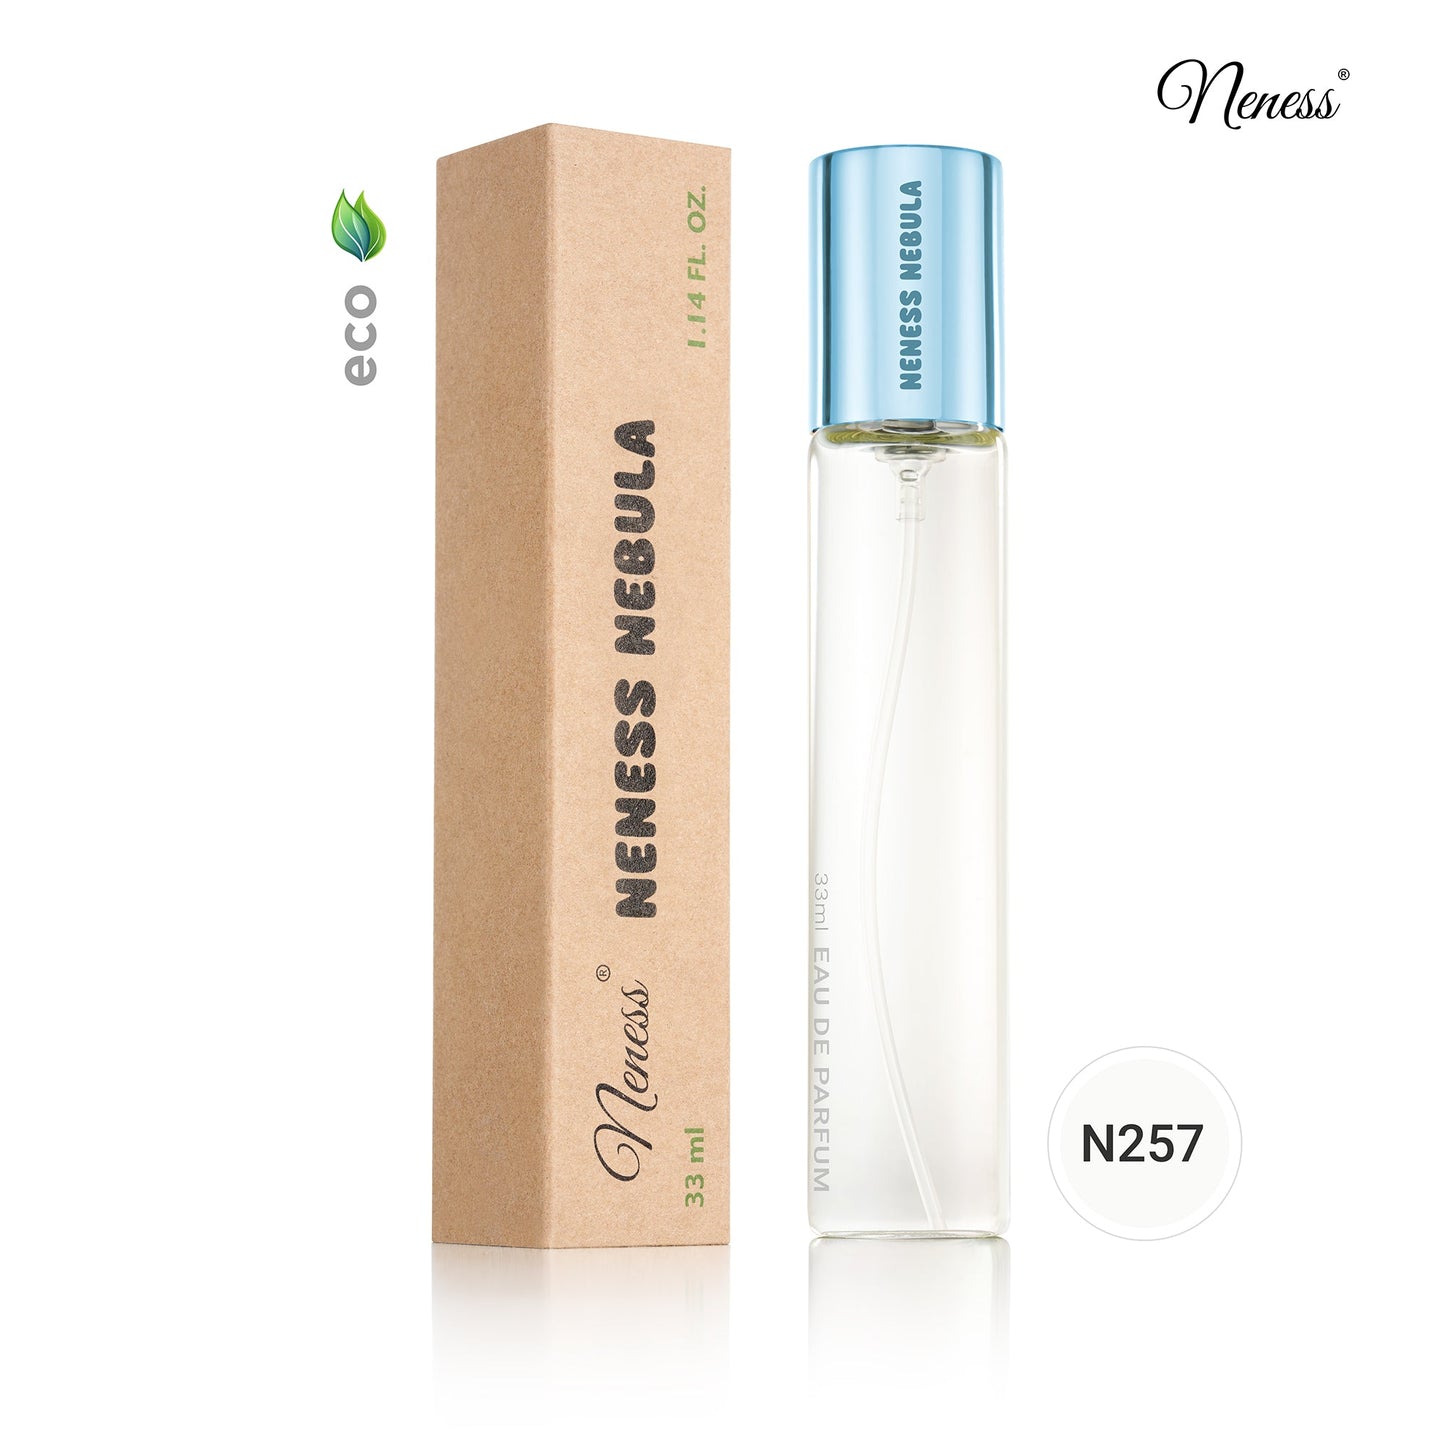 N257. Neness Nebula - 33 ml - Parfums Pour Femmes